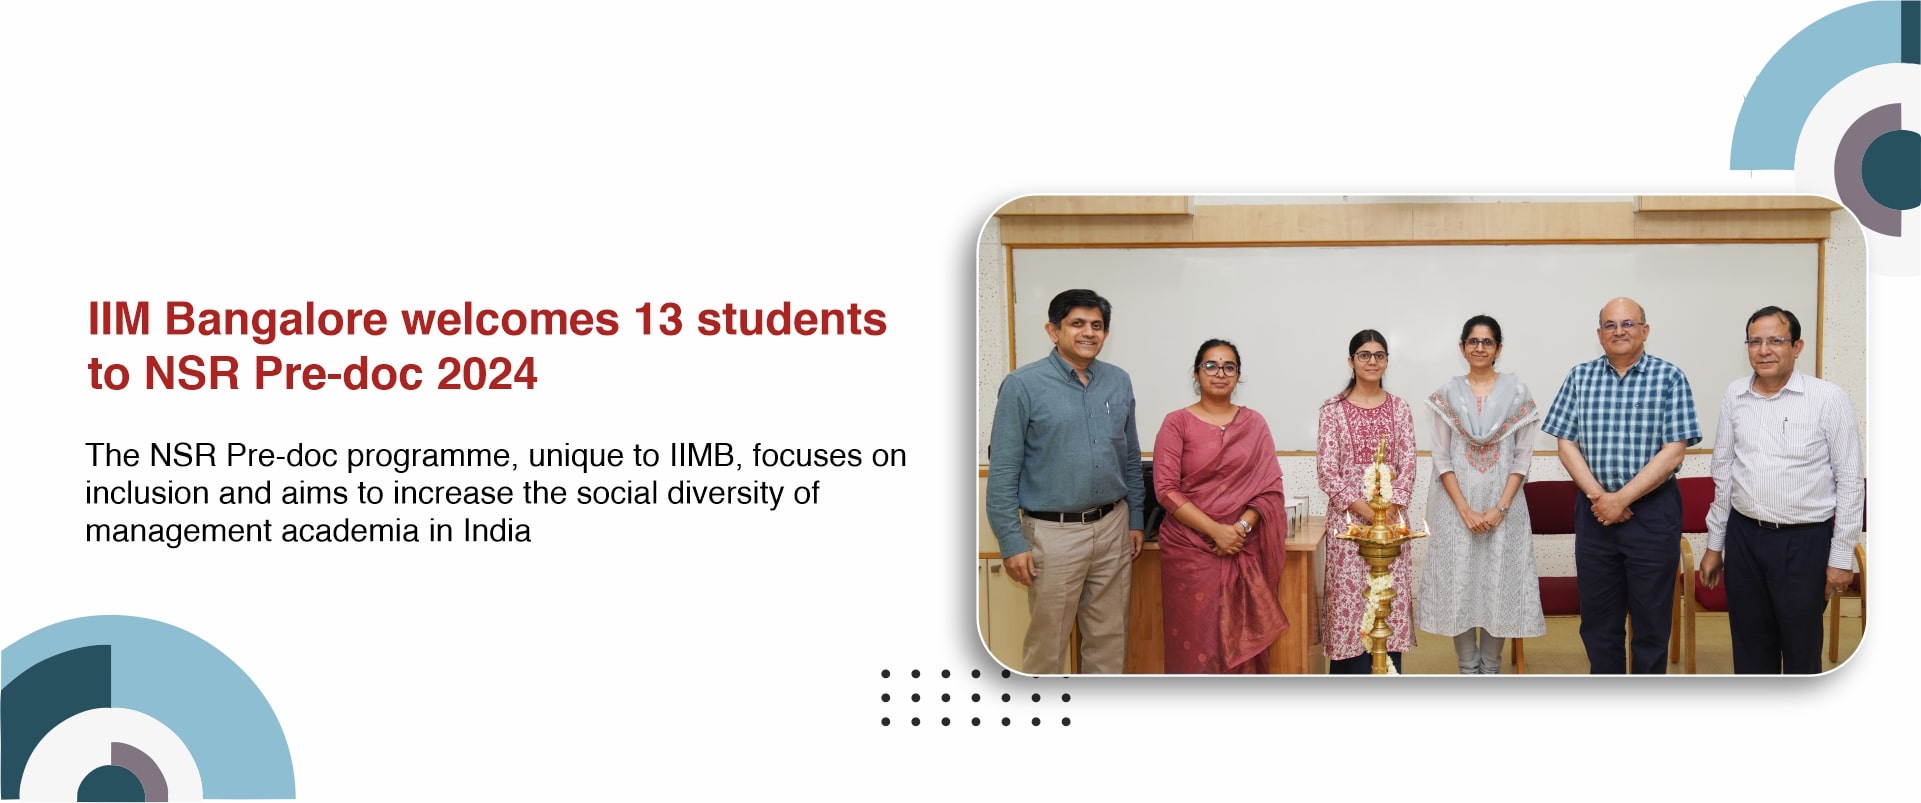 IIM Bangalore welcomes 13 students to NSR Pre-doc 2024 